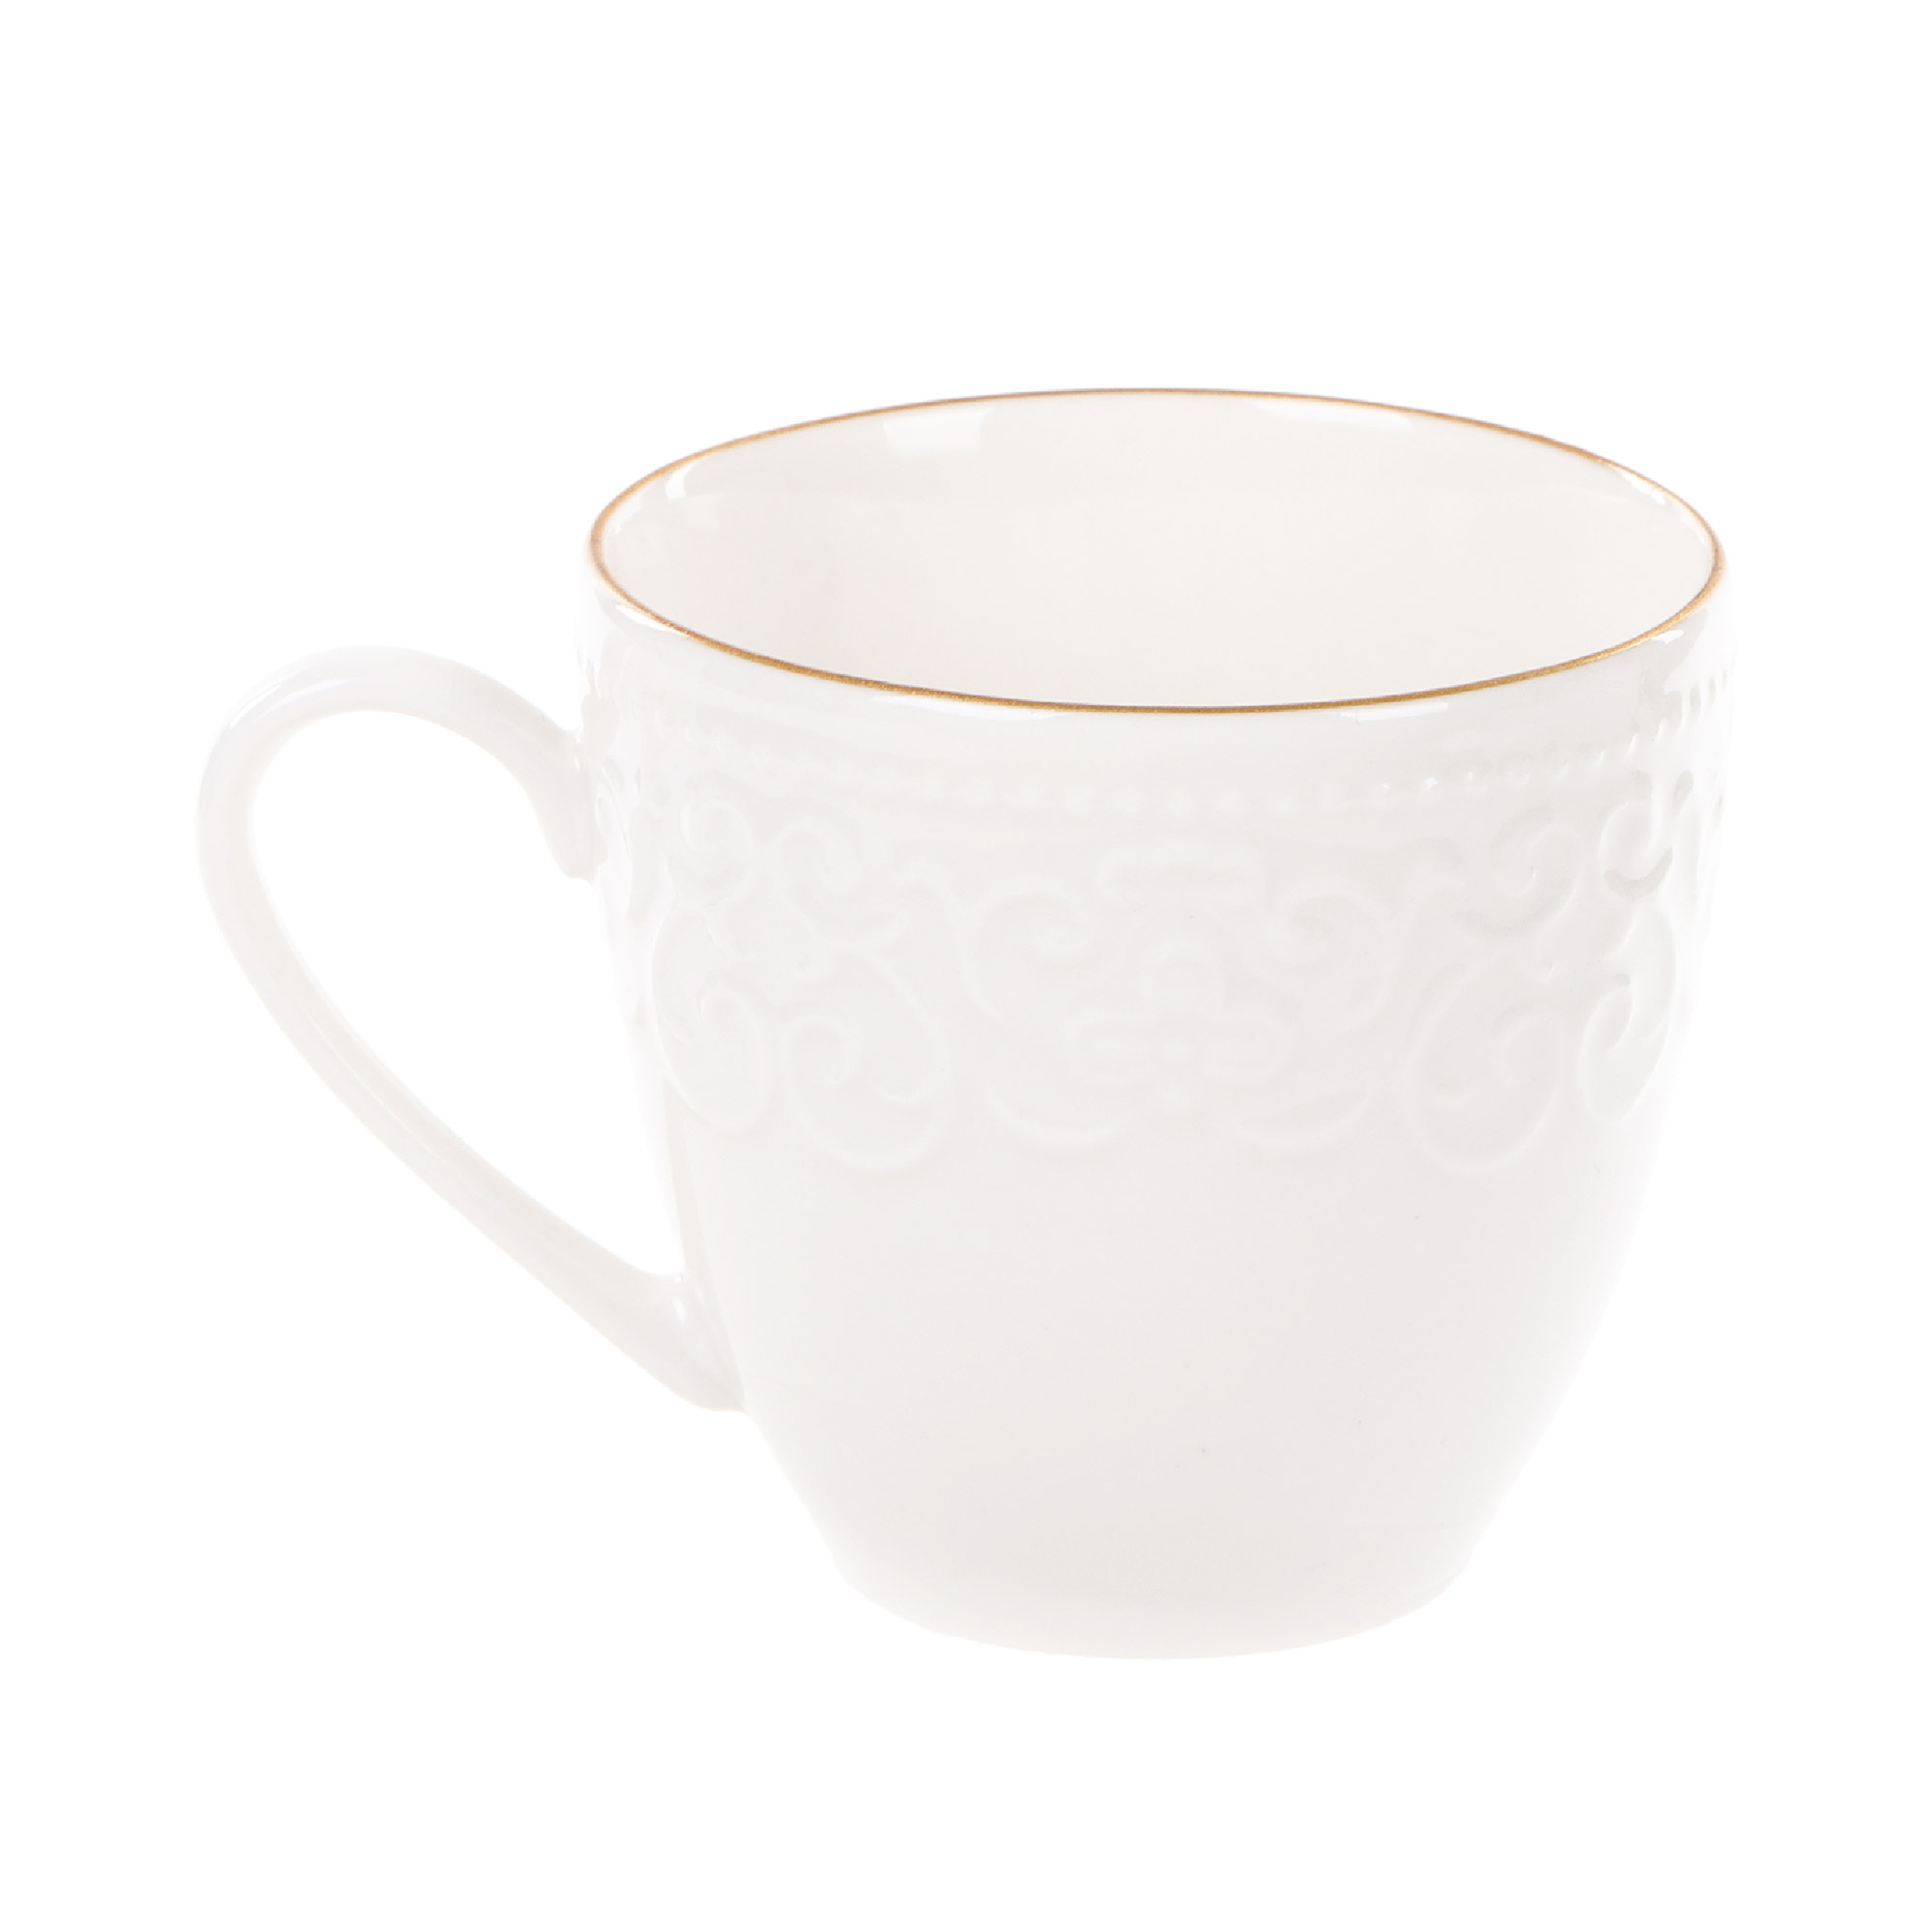 Чашка с блюдцем кофейная 100 мл, Kutahya Porselen irem отводка золото - фото 2